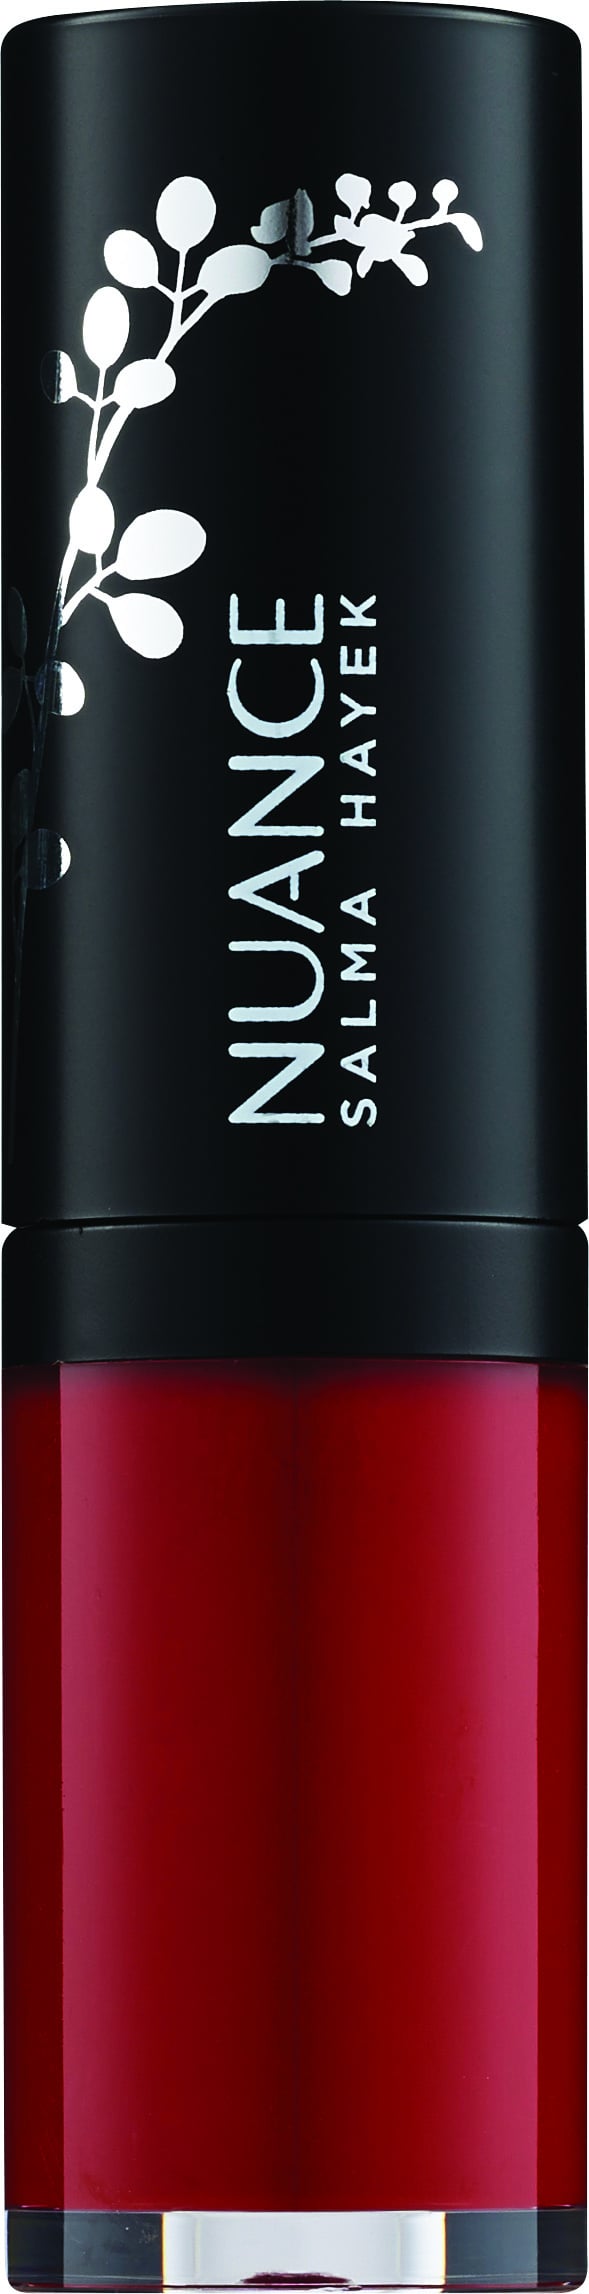 Nuance Salma Hayek True Color Plumping Liquid Lipstick in Ripe Cherry